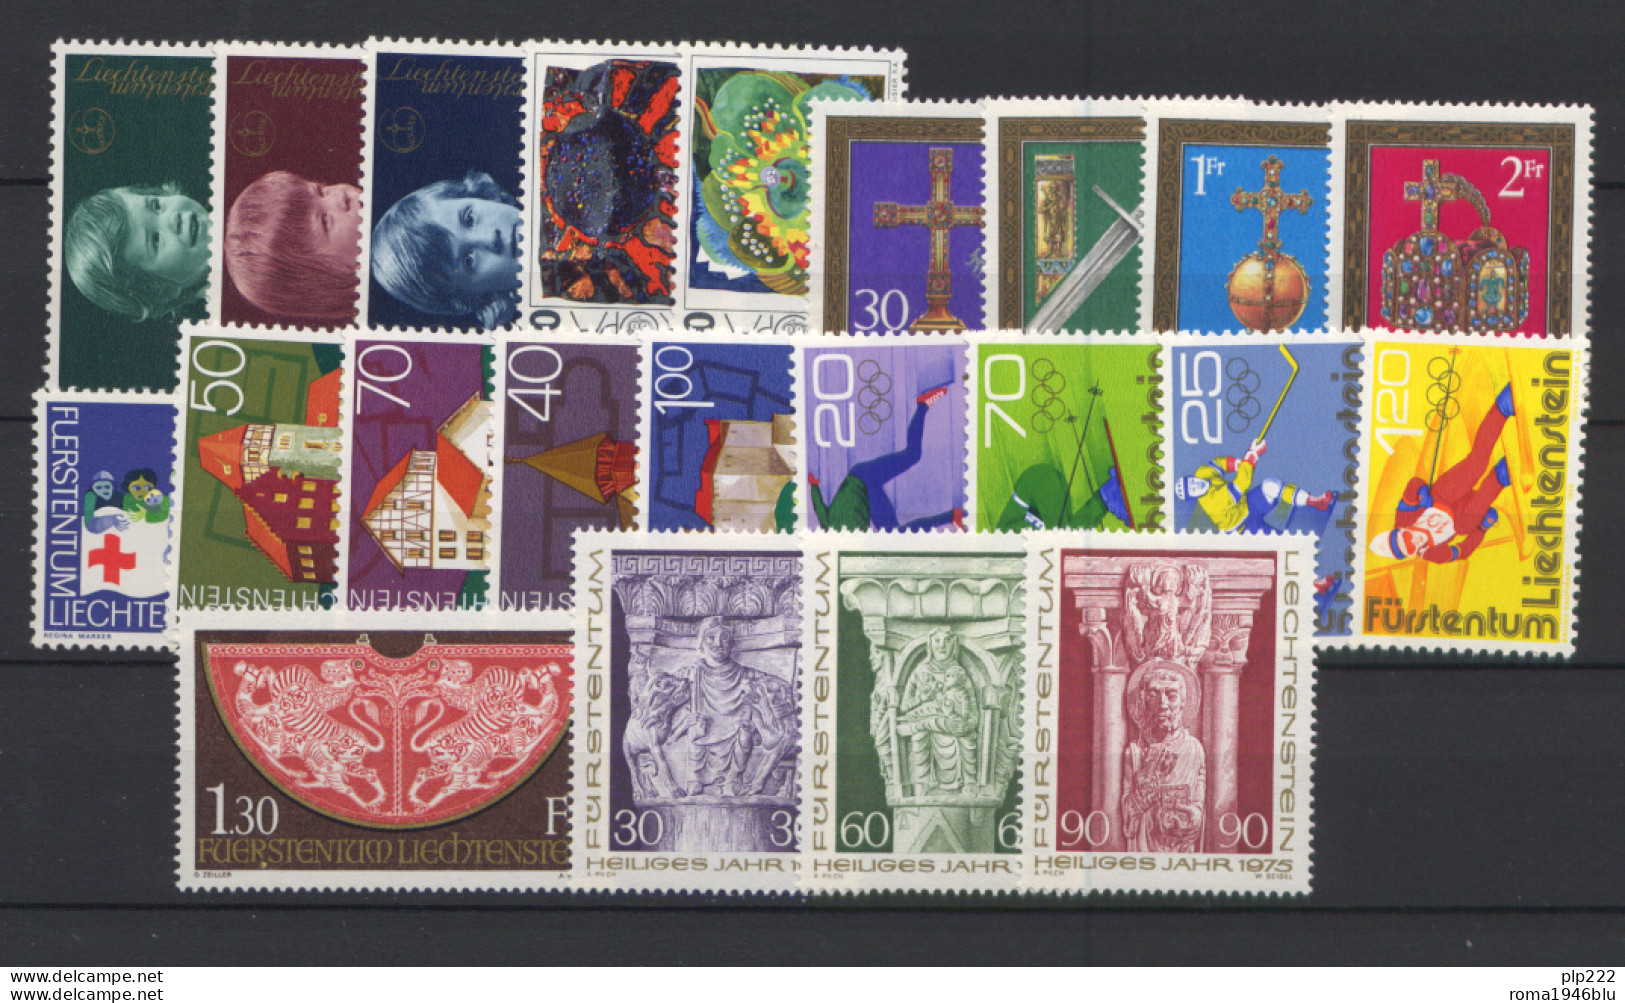 Liechtenstein 1975 Annata Completa / Complete Year Set **/MNH VF - Années Complètes